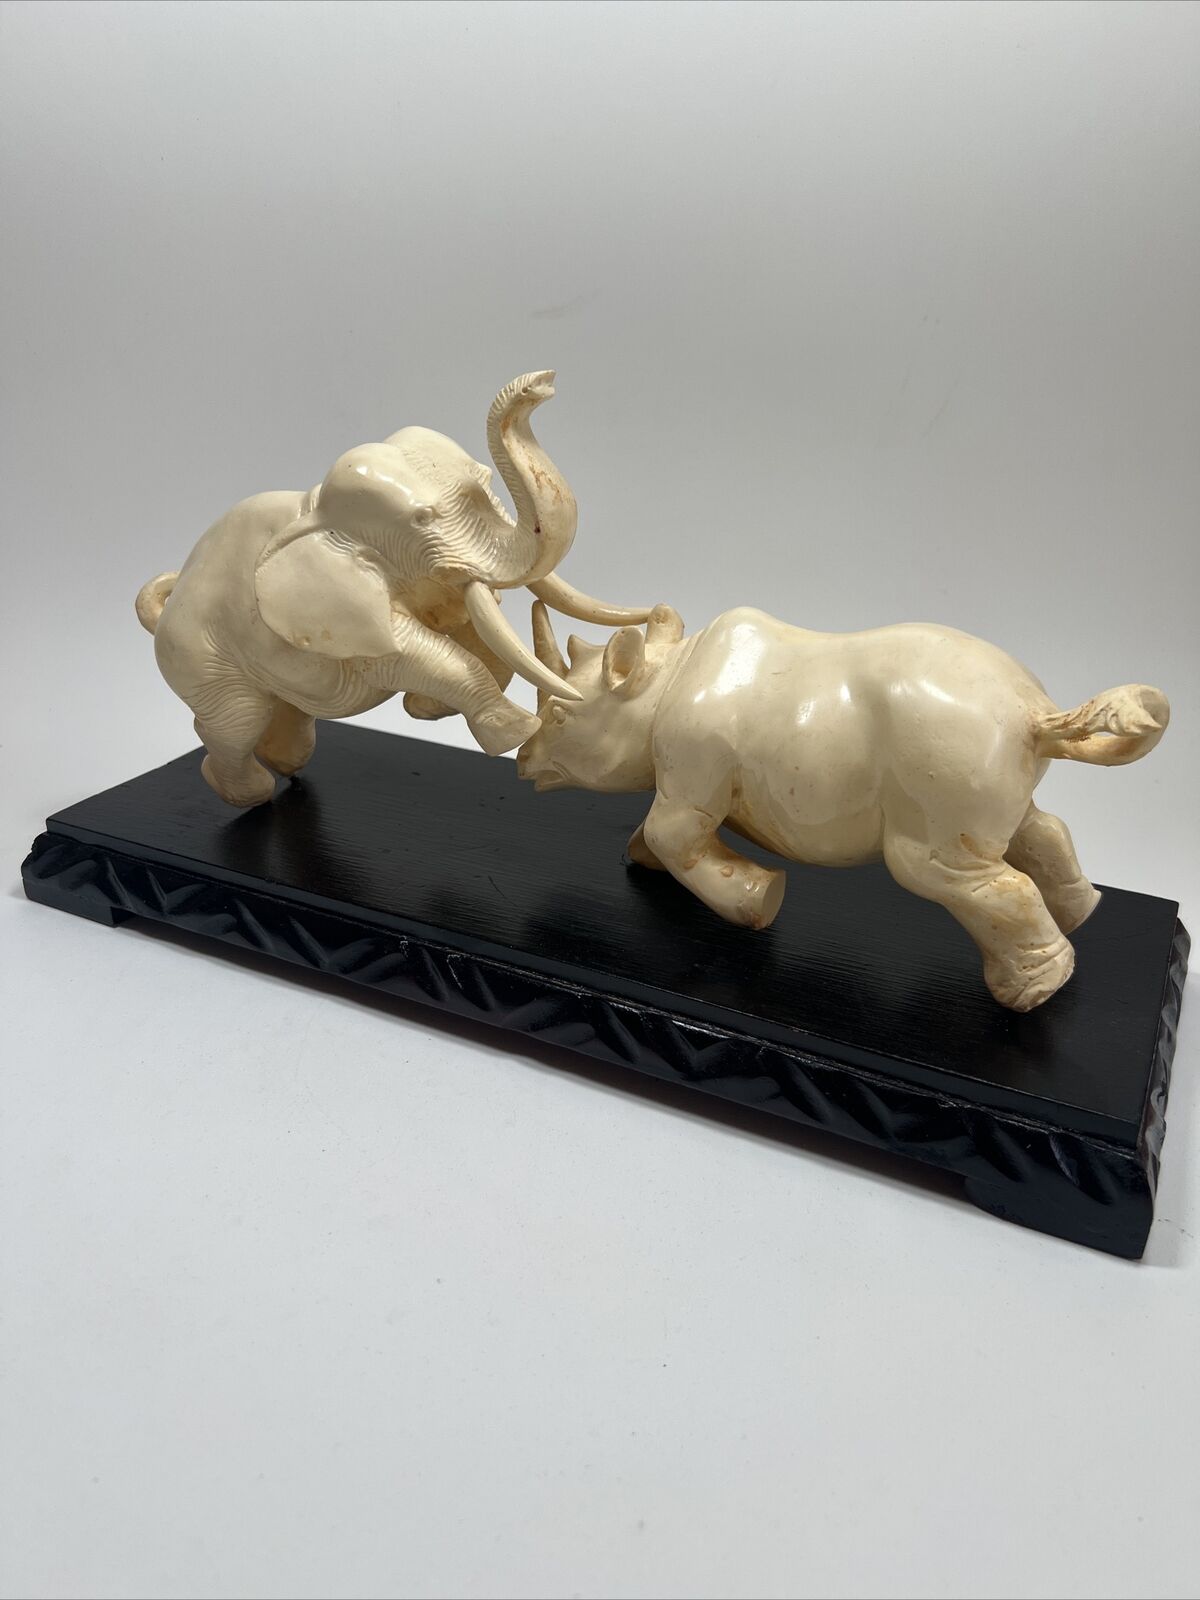 Vintage Asian Resin Figurine Elephant Fighting A Rhino